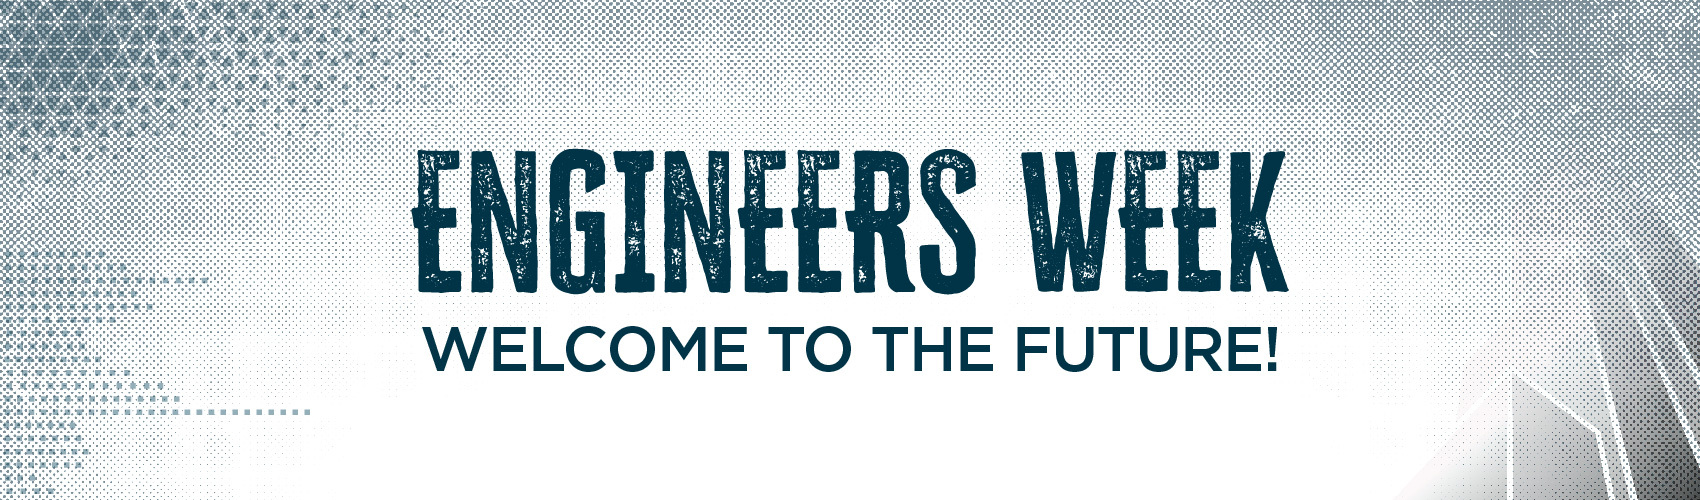 Engineers Week Welcome to the Future Banner Desktop